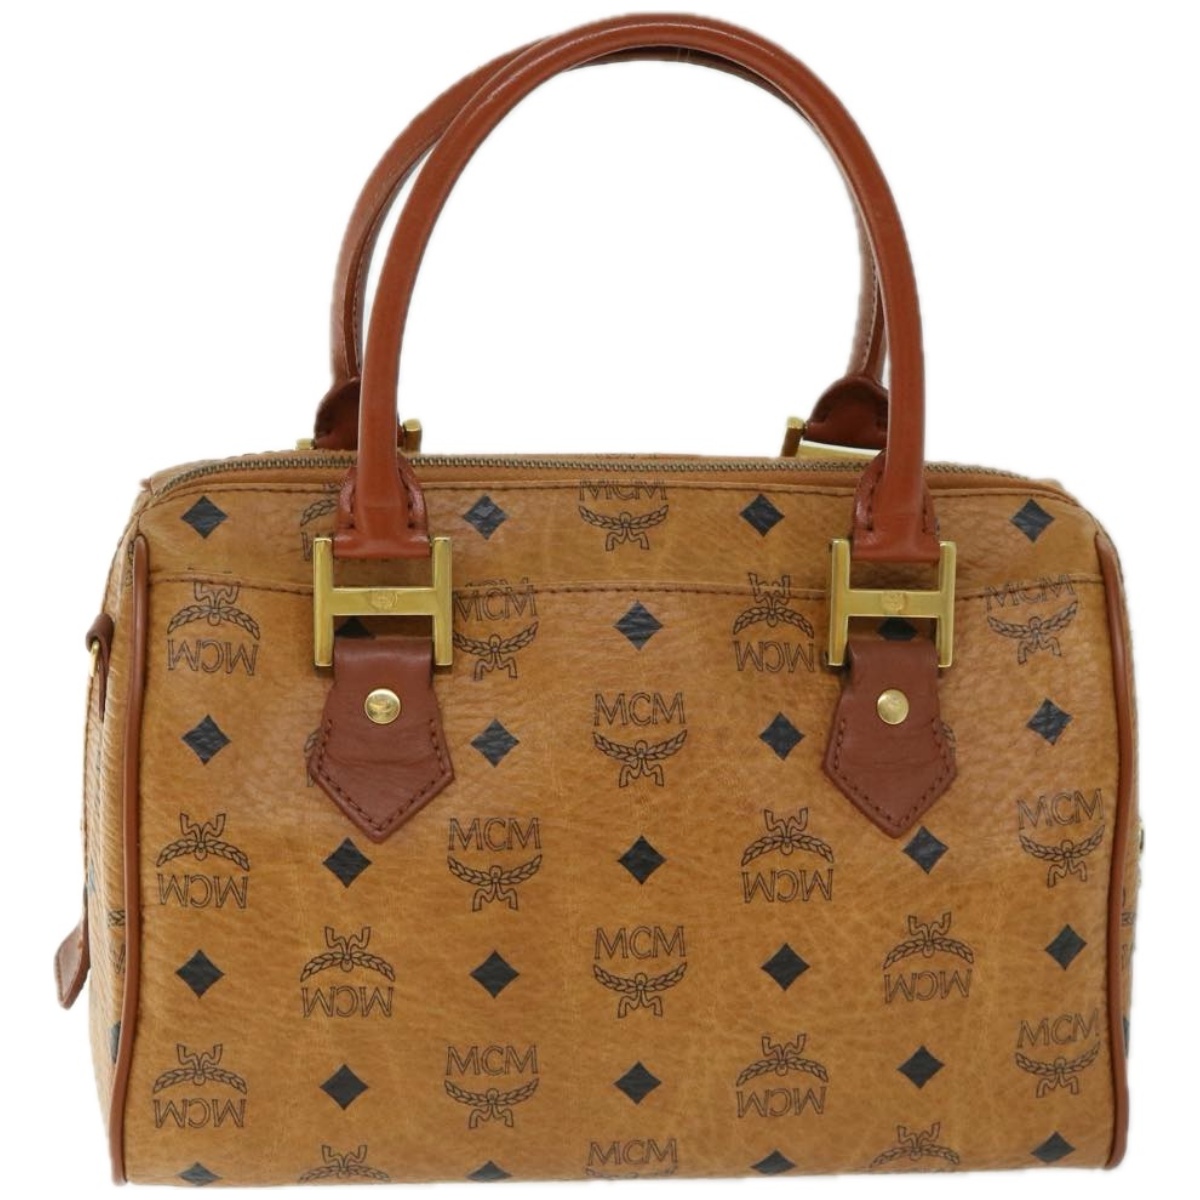 Brown Canvas Handbag with Timeless Design - Good Condition